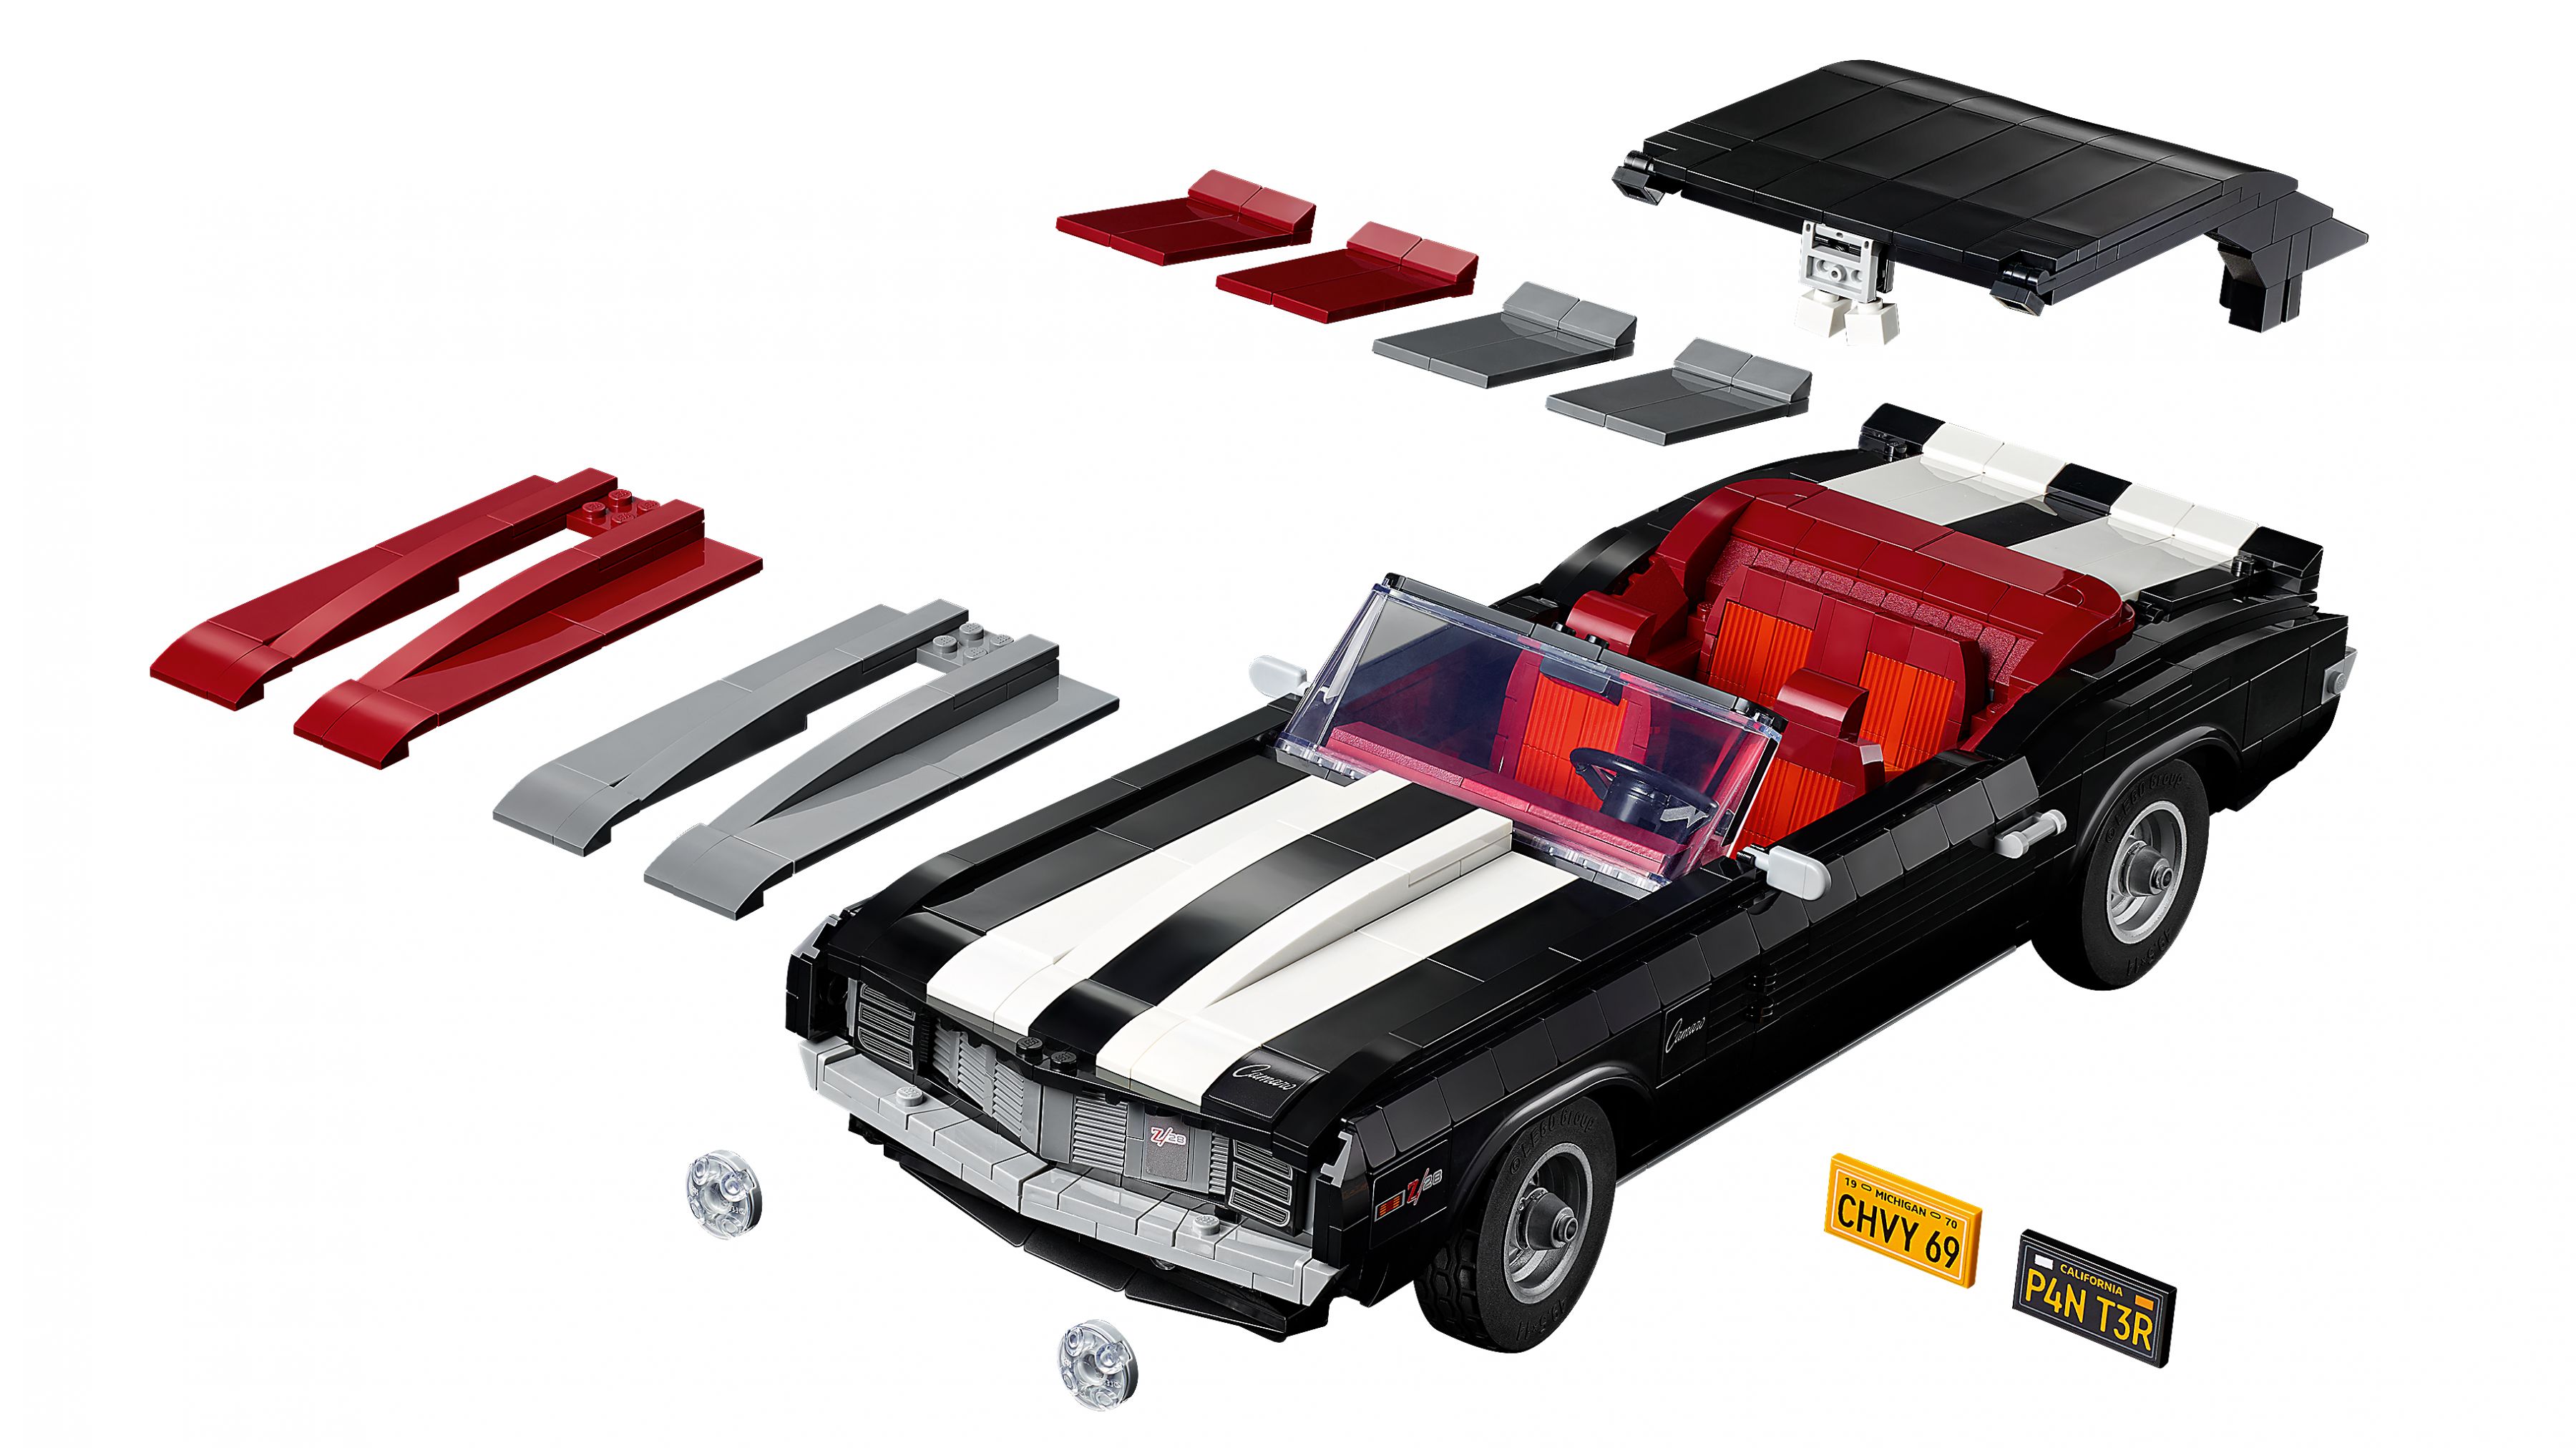 LEGO Advanced Models 10304 Chevrolet Camaro Z28 LEGO_10304_WEB_SEC05_NOBG.jpg